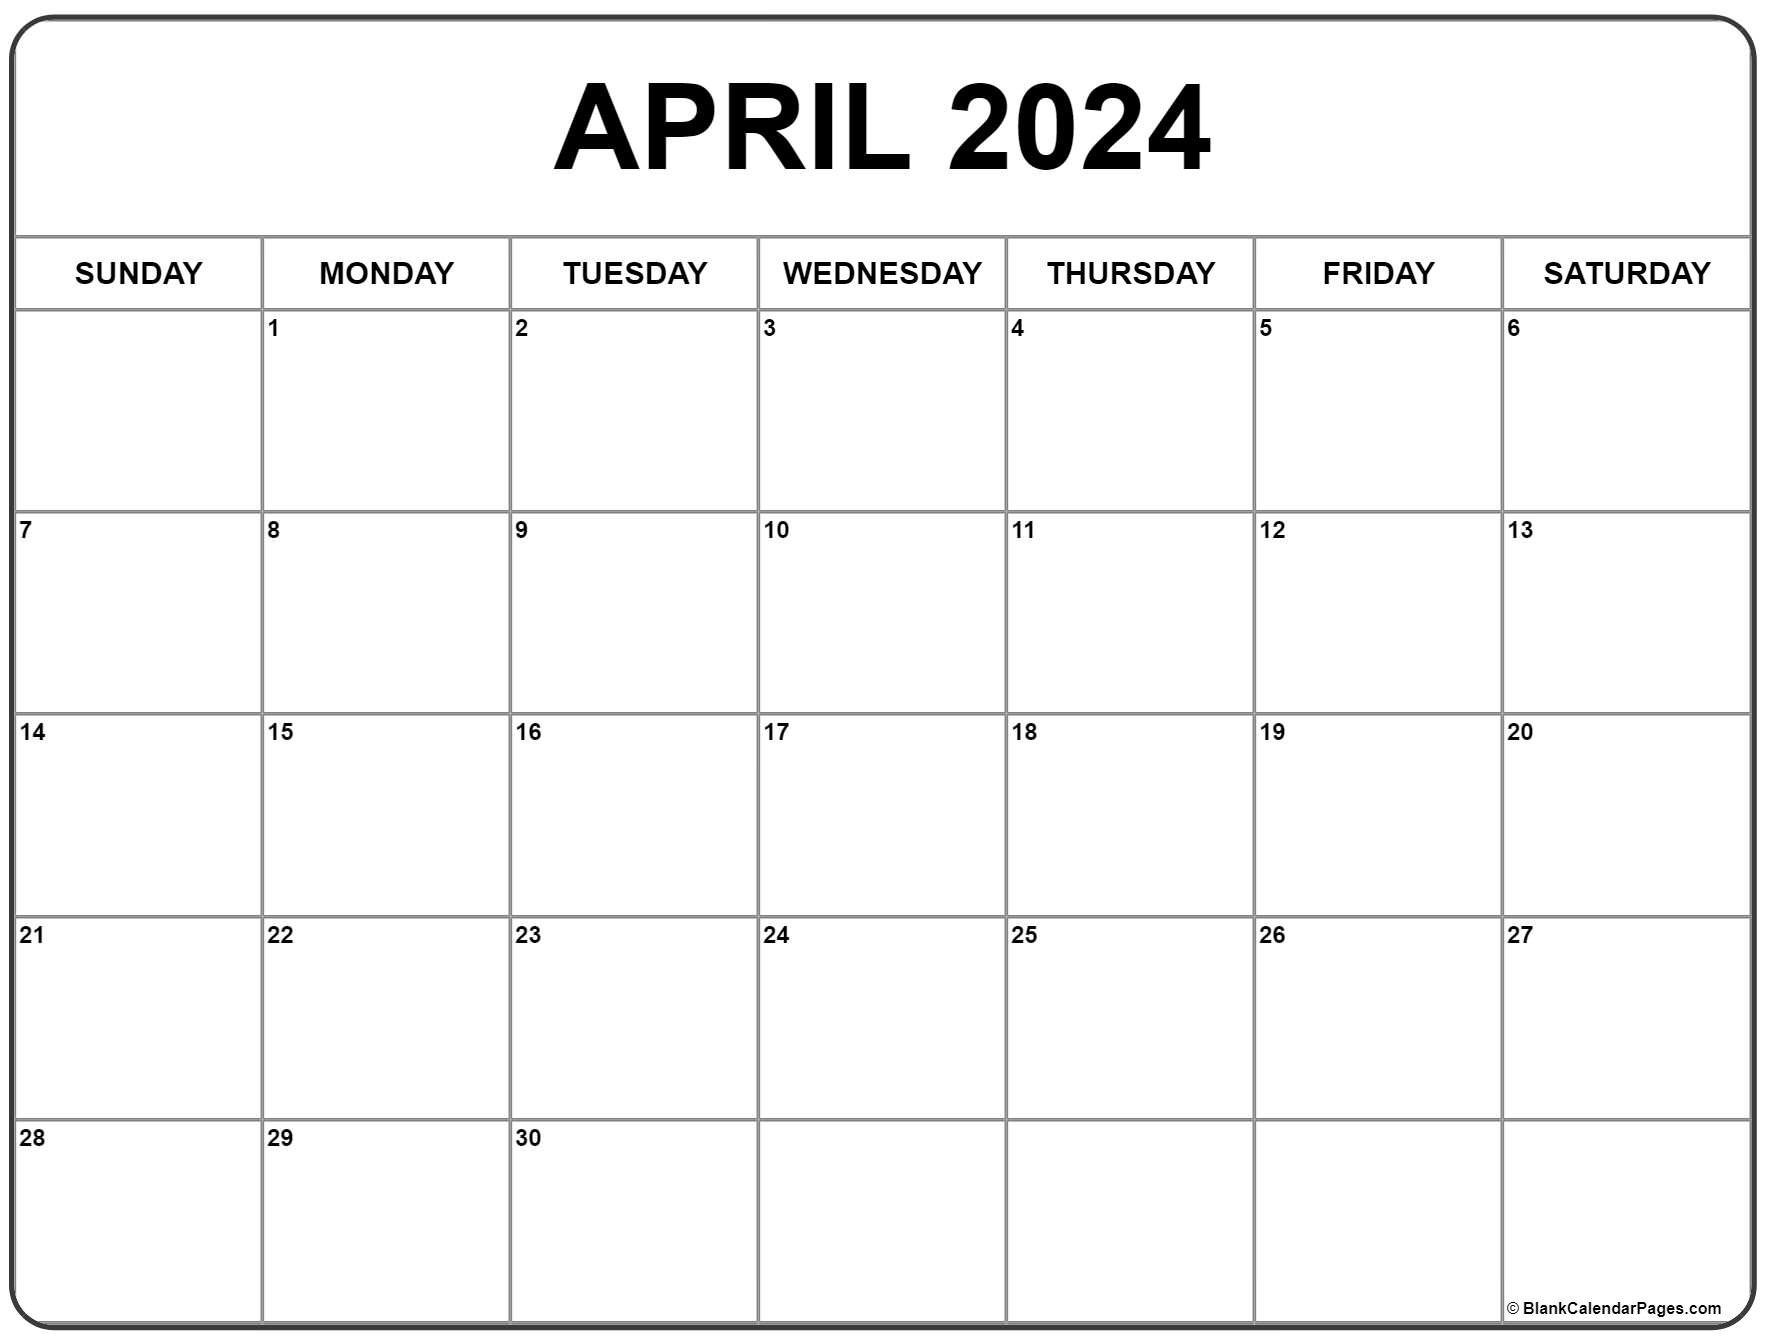 April 2024 Calendar | Free Printable Calendar for Calendar March And April 2024 Printable